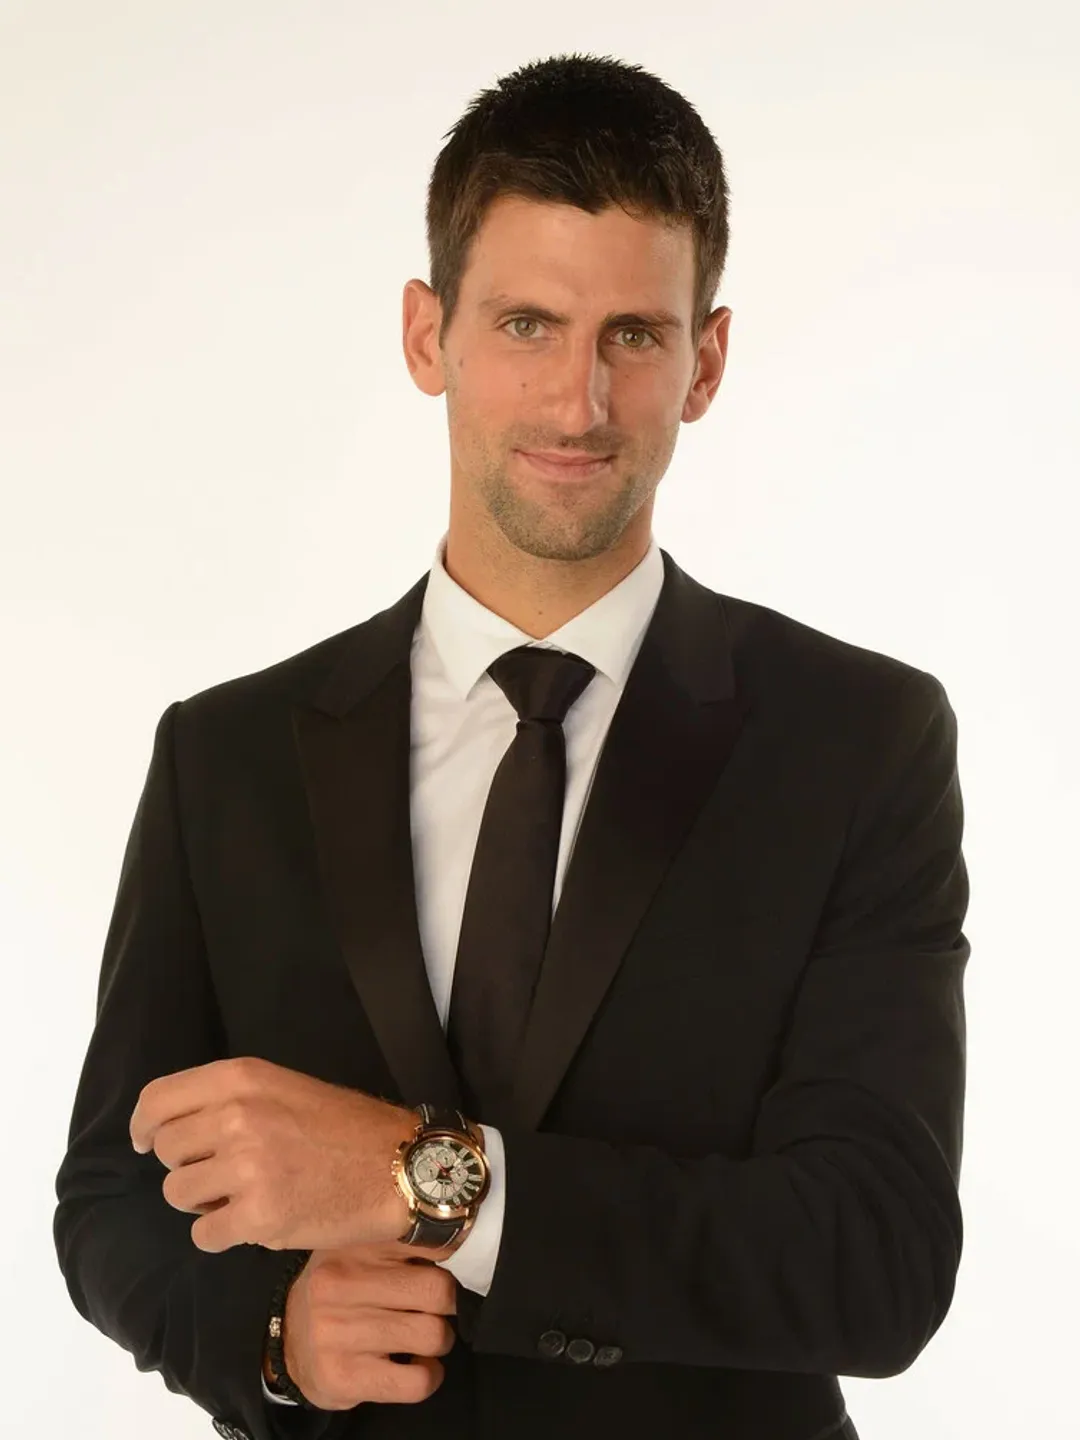 Novak Djokovic life path